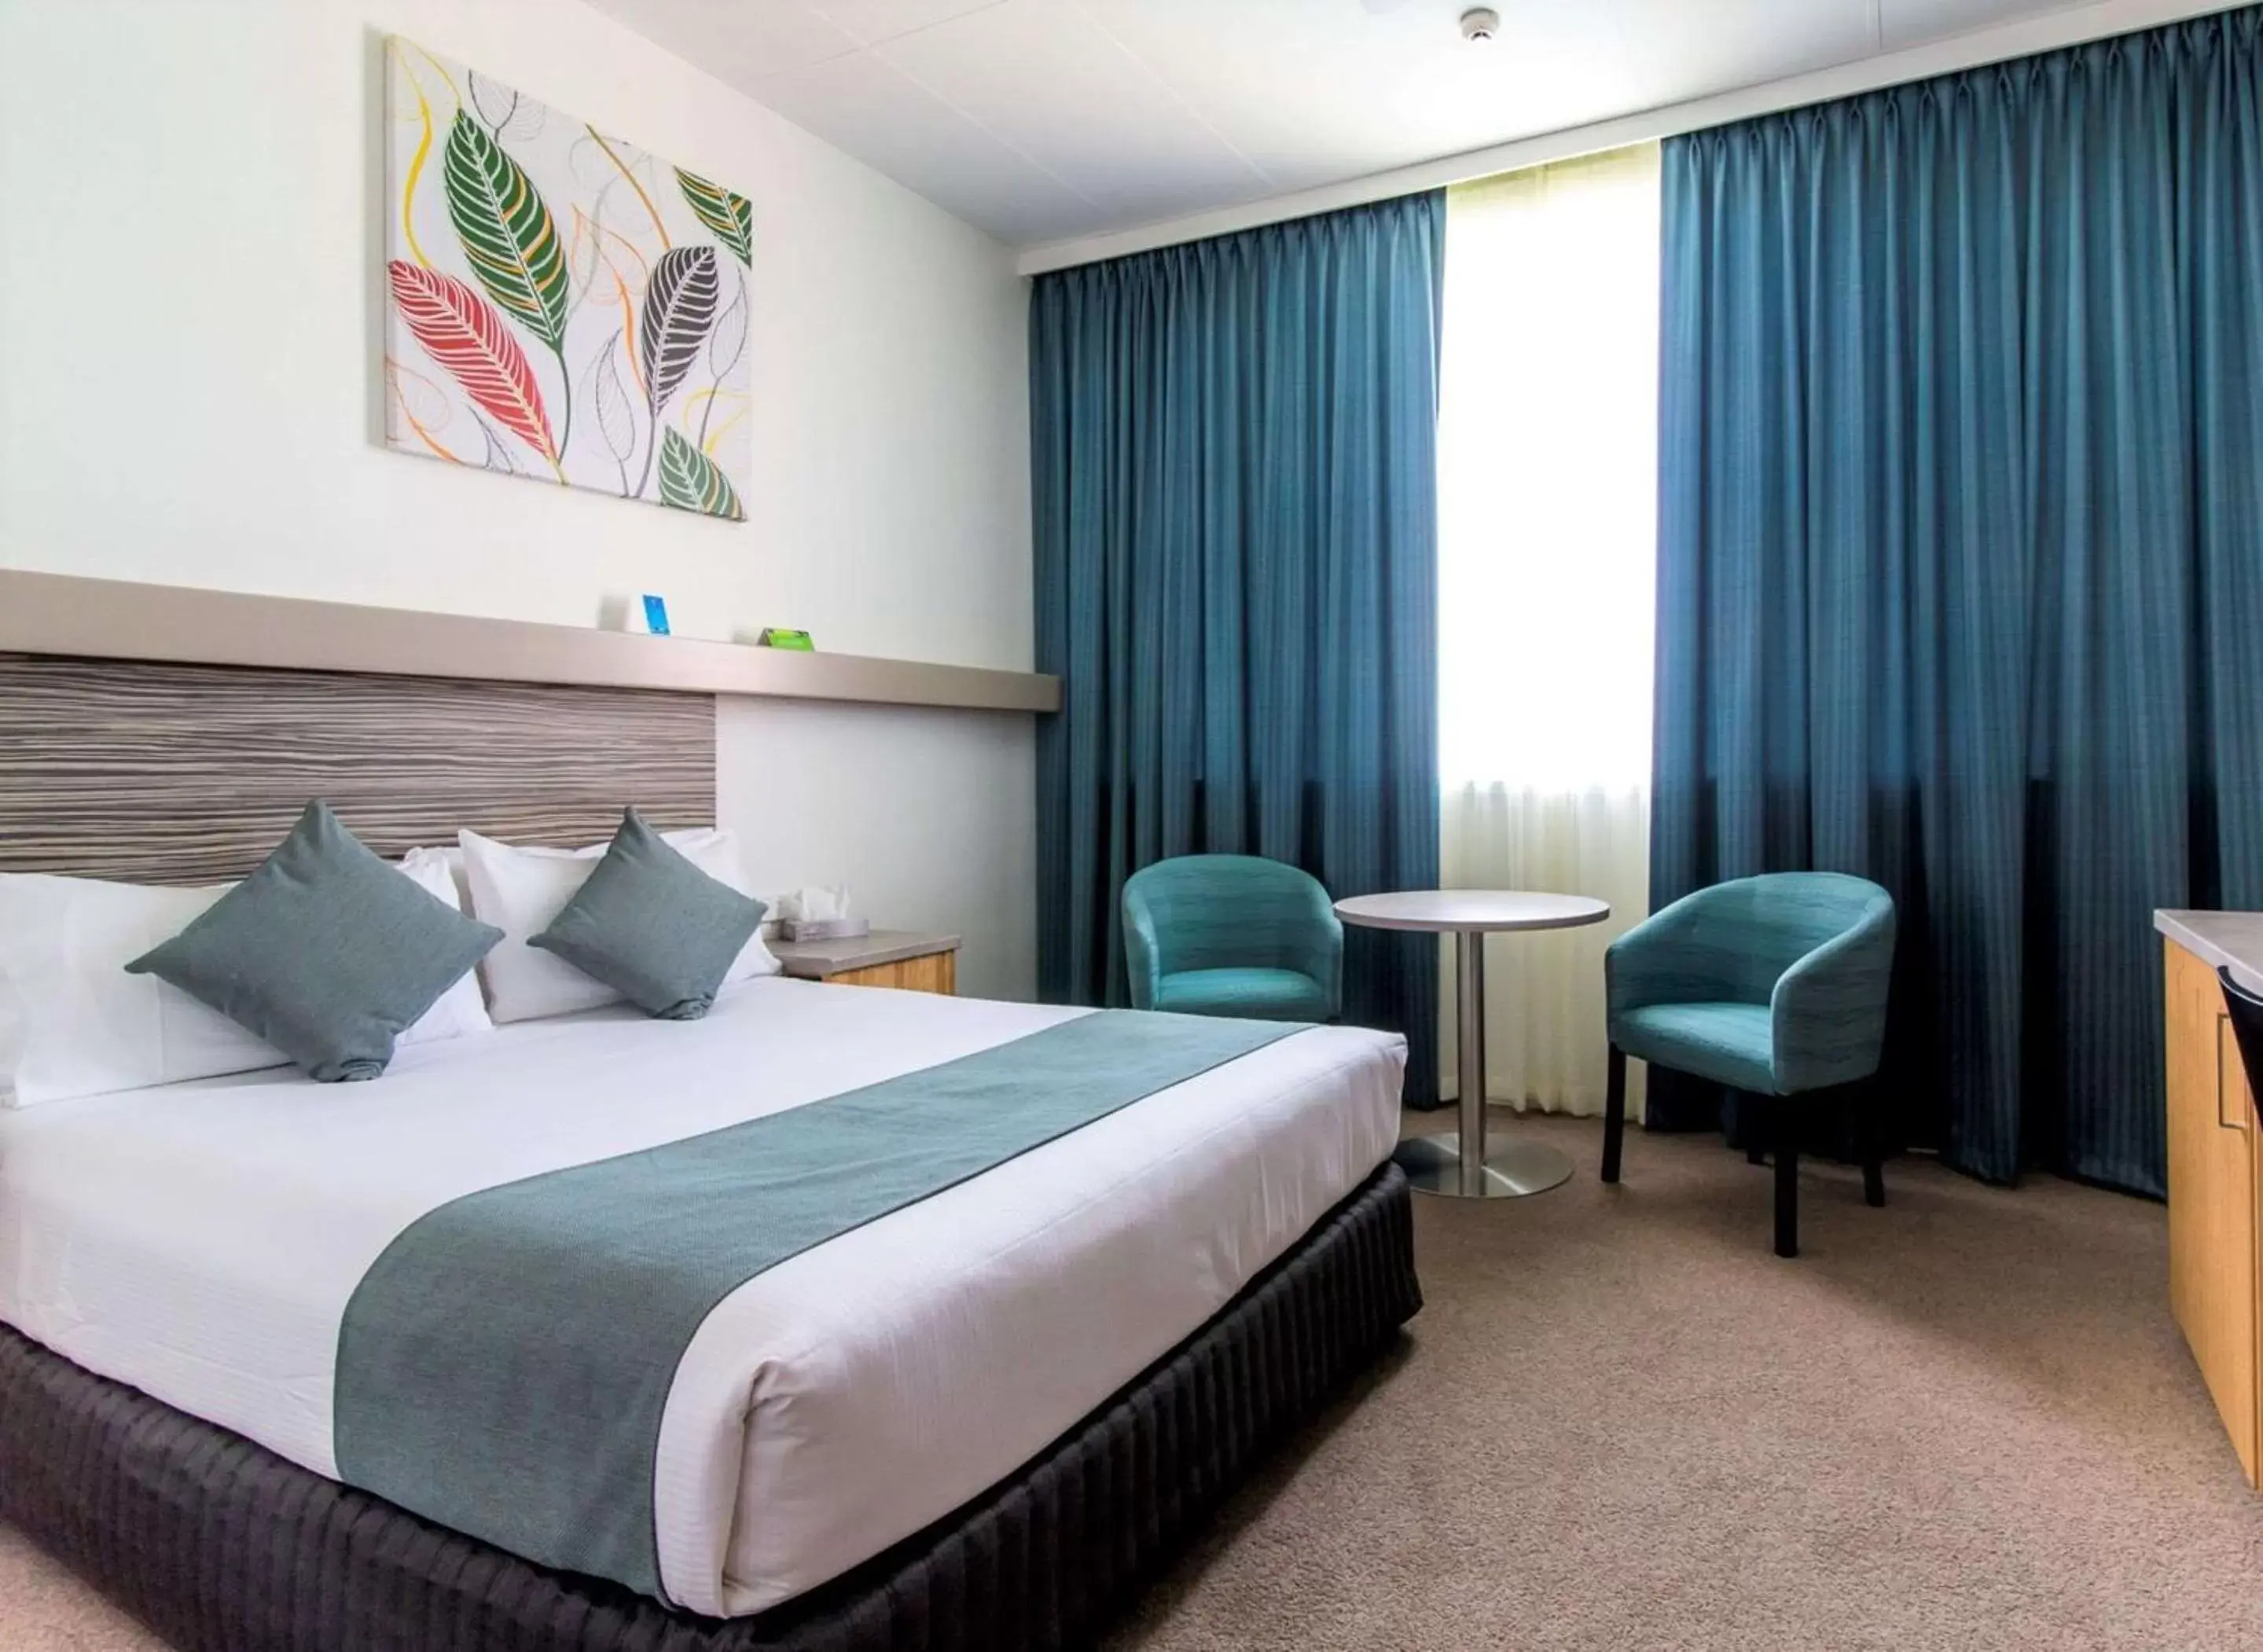 Bedroom, Bed in Comfort Inn Regal Park, North Adelaide